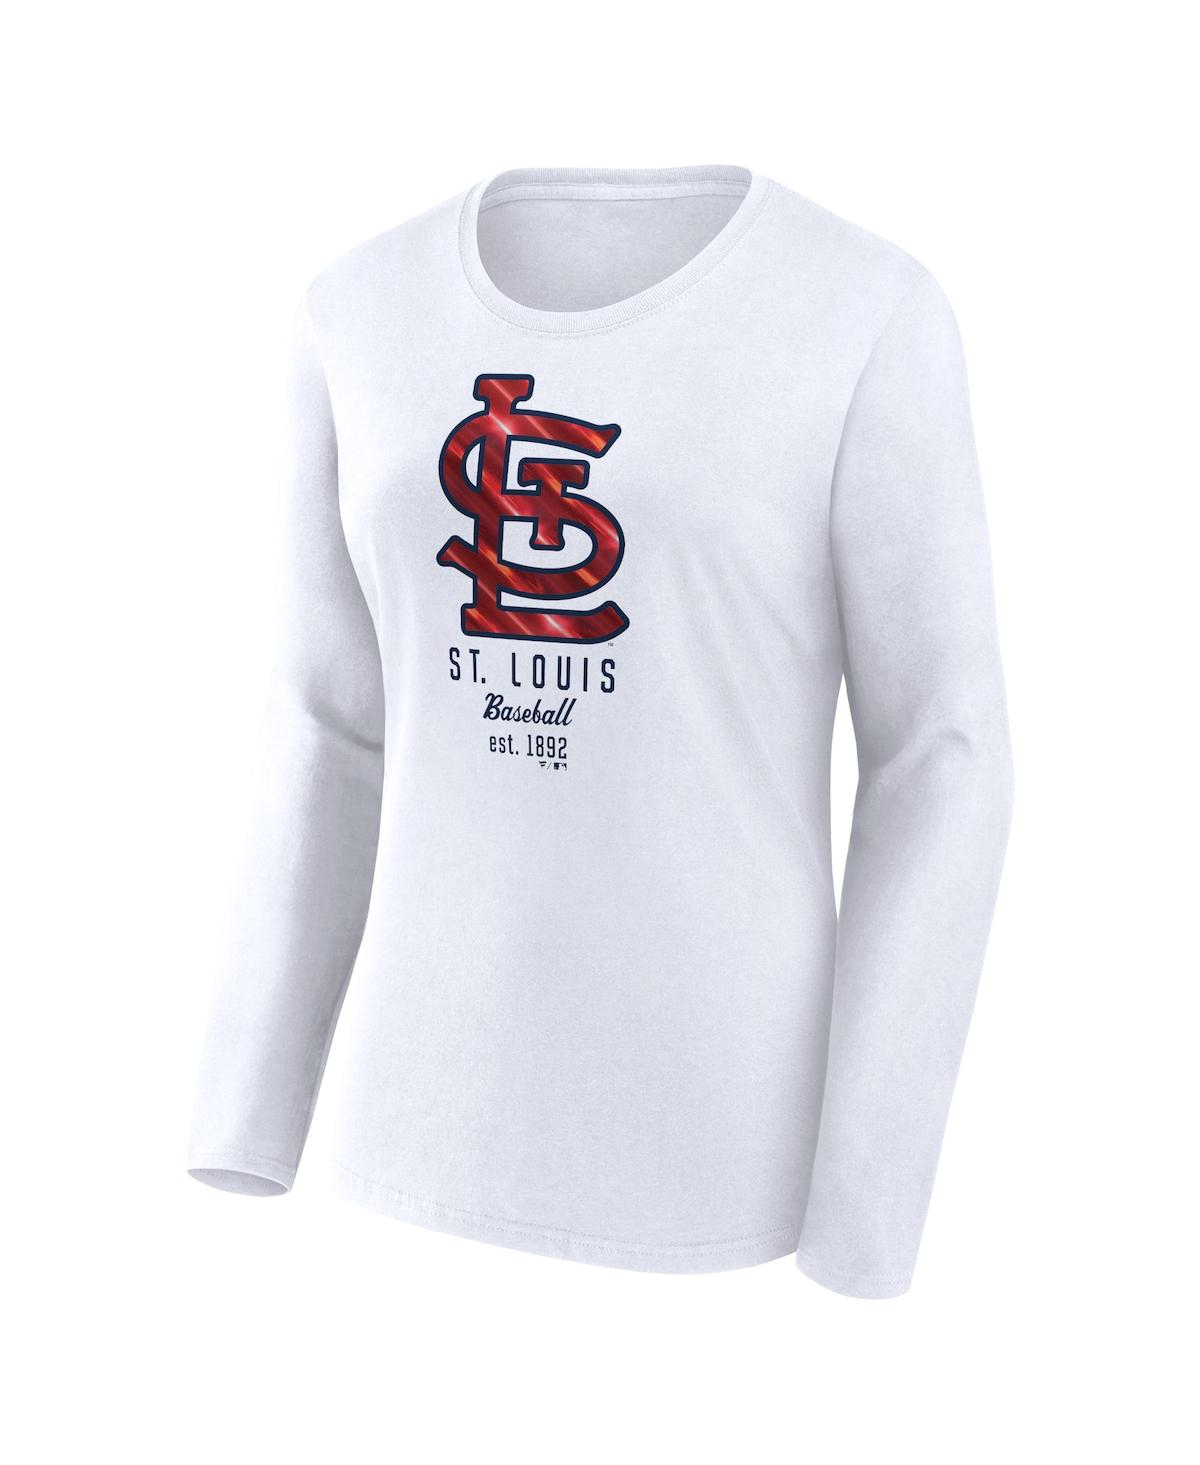 Fanatics Women's Branded White St. Louis Cardinals Long Sleeve T-shirt